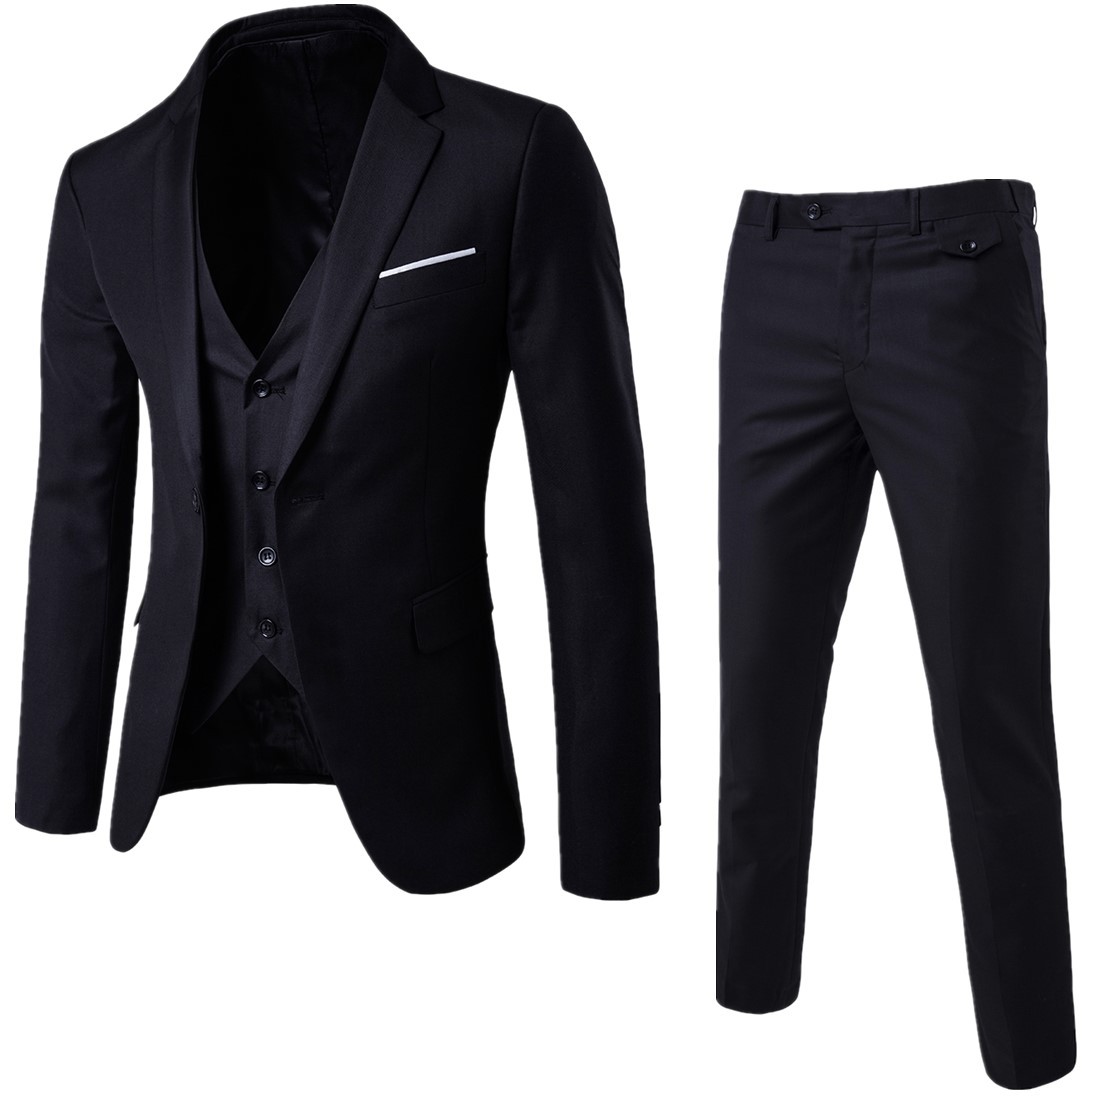 Business men's formal fit trousers suit business suit three piece bridegroom best man wedding dress trend